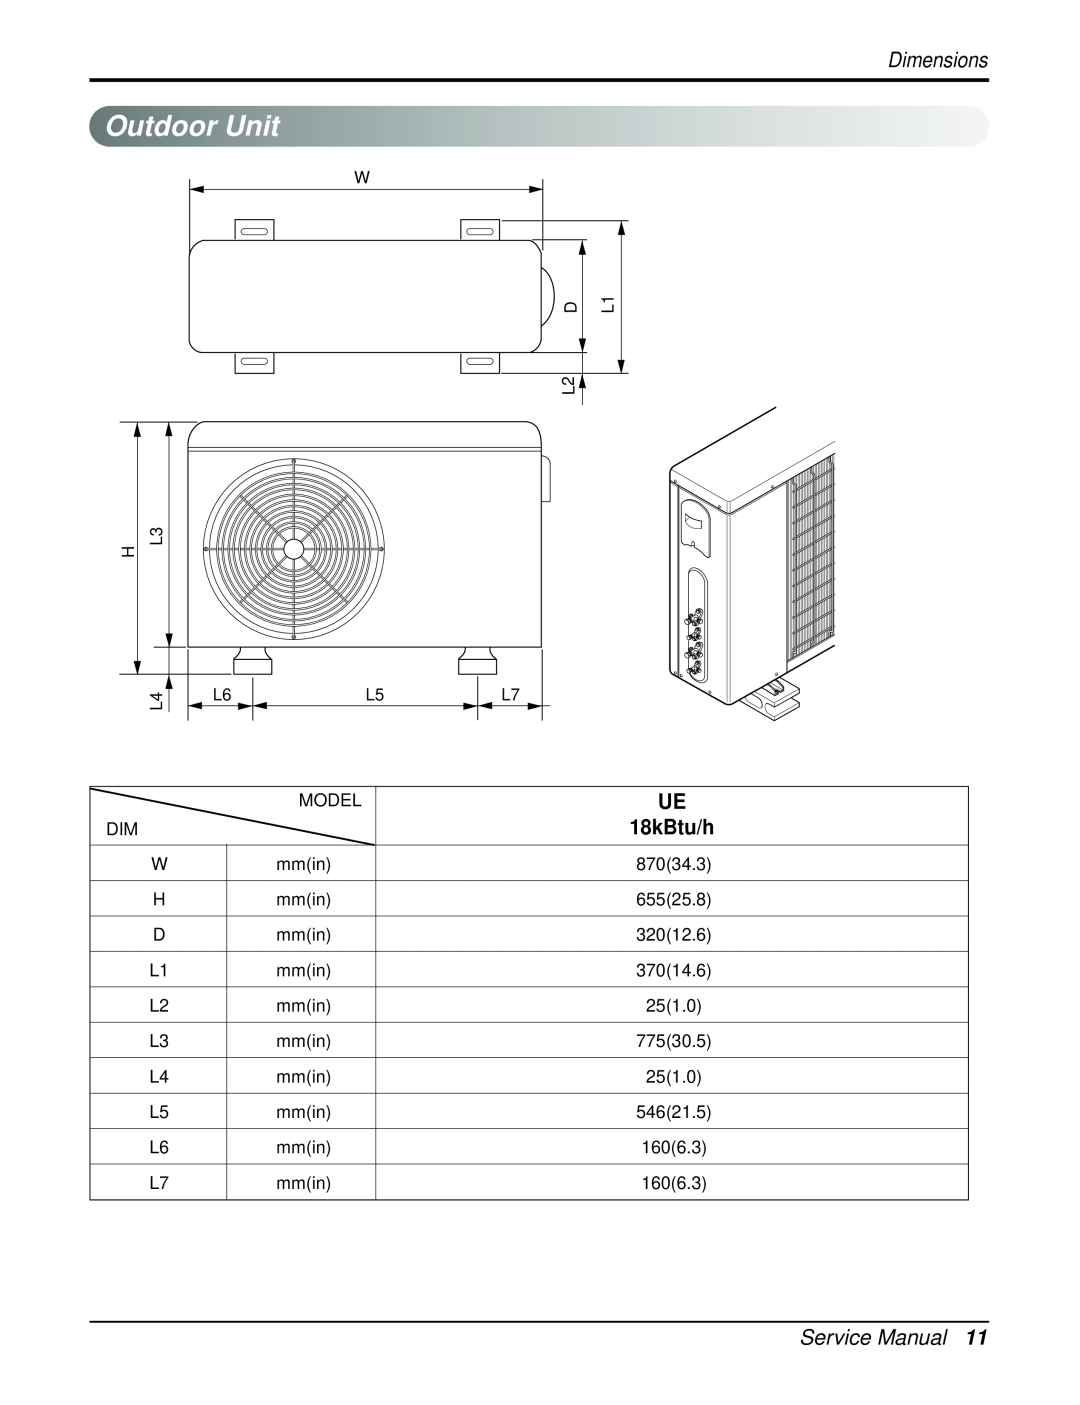 Heat Controller DMH18DB-1 manual OutdoorUnit, Dimensions, UE 18kBtu/h, Service Manual 